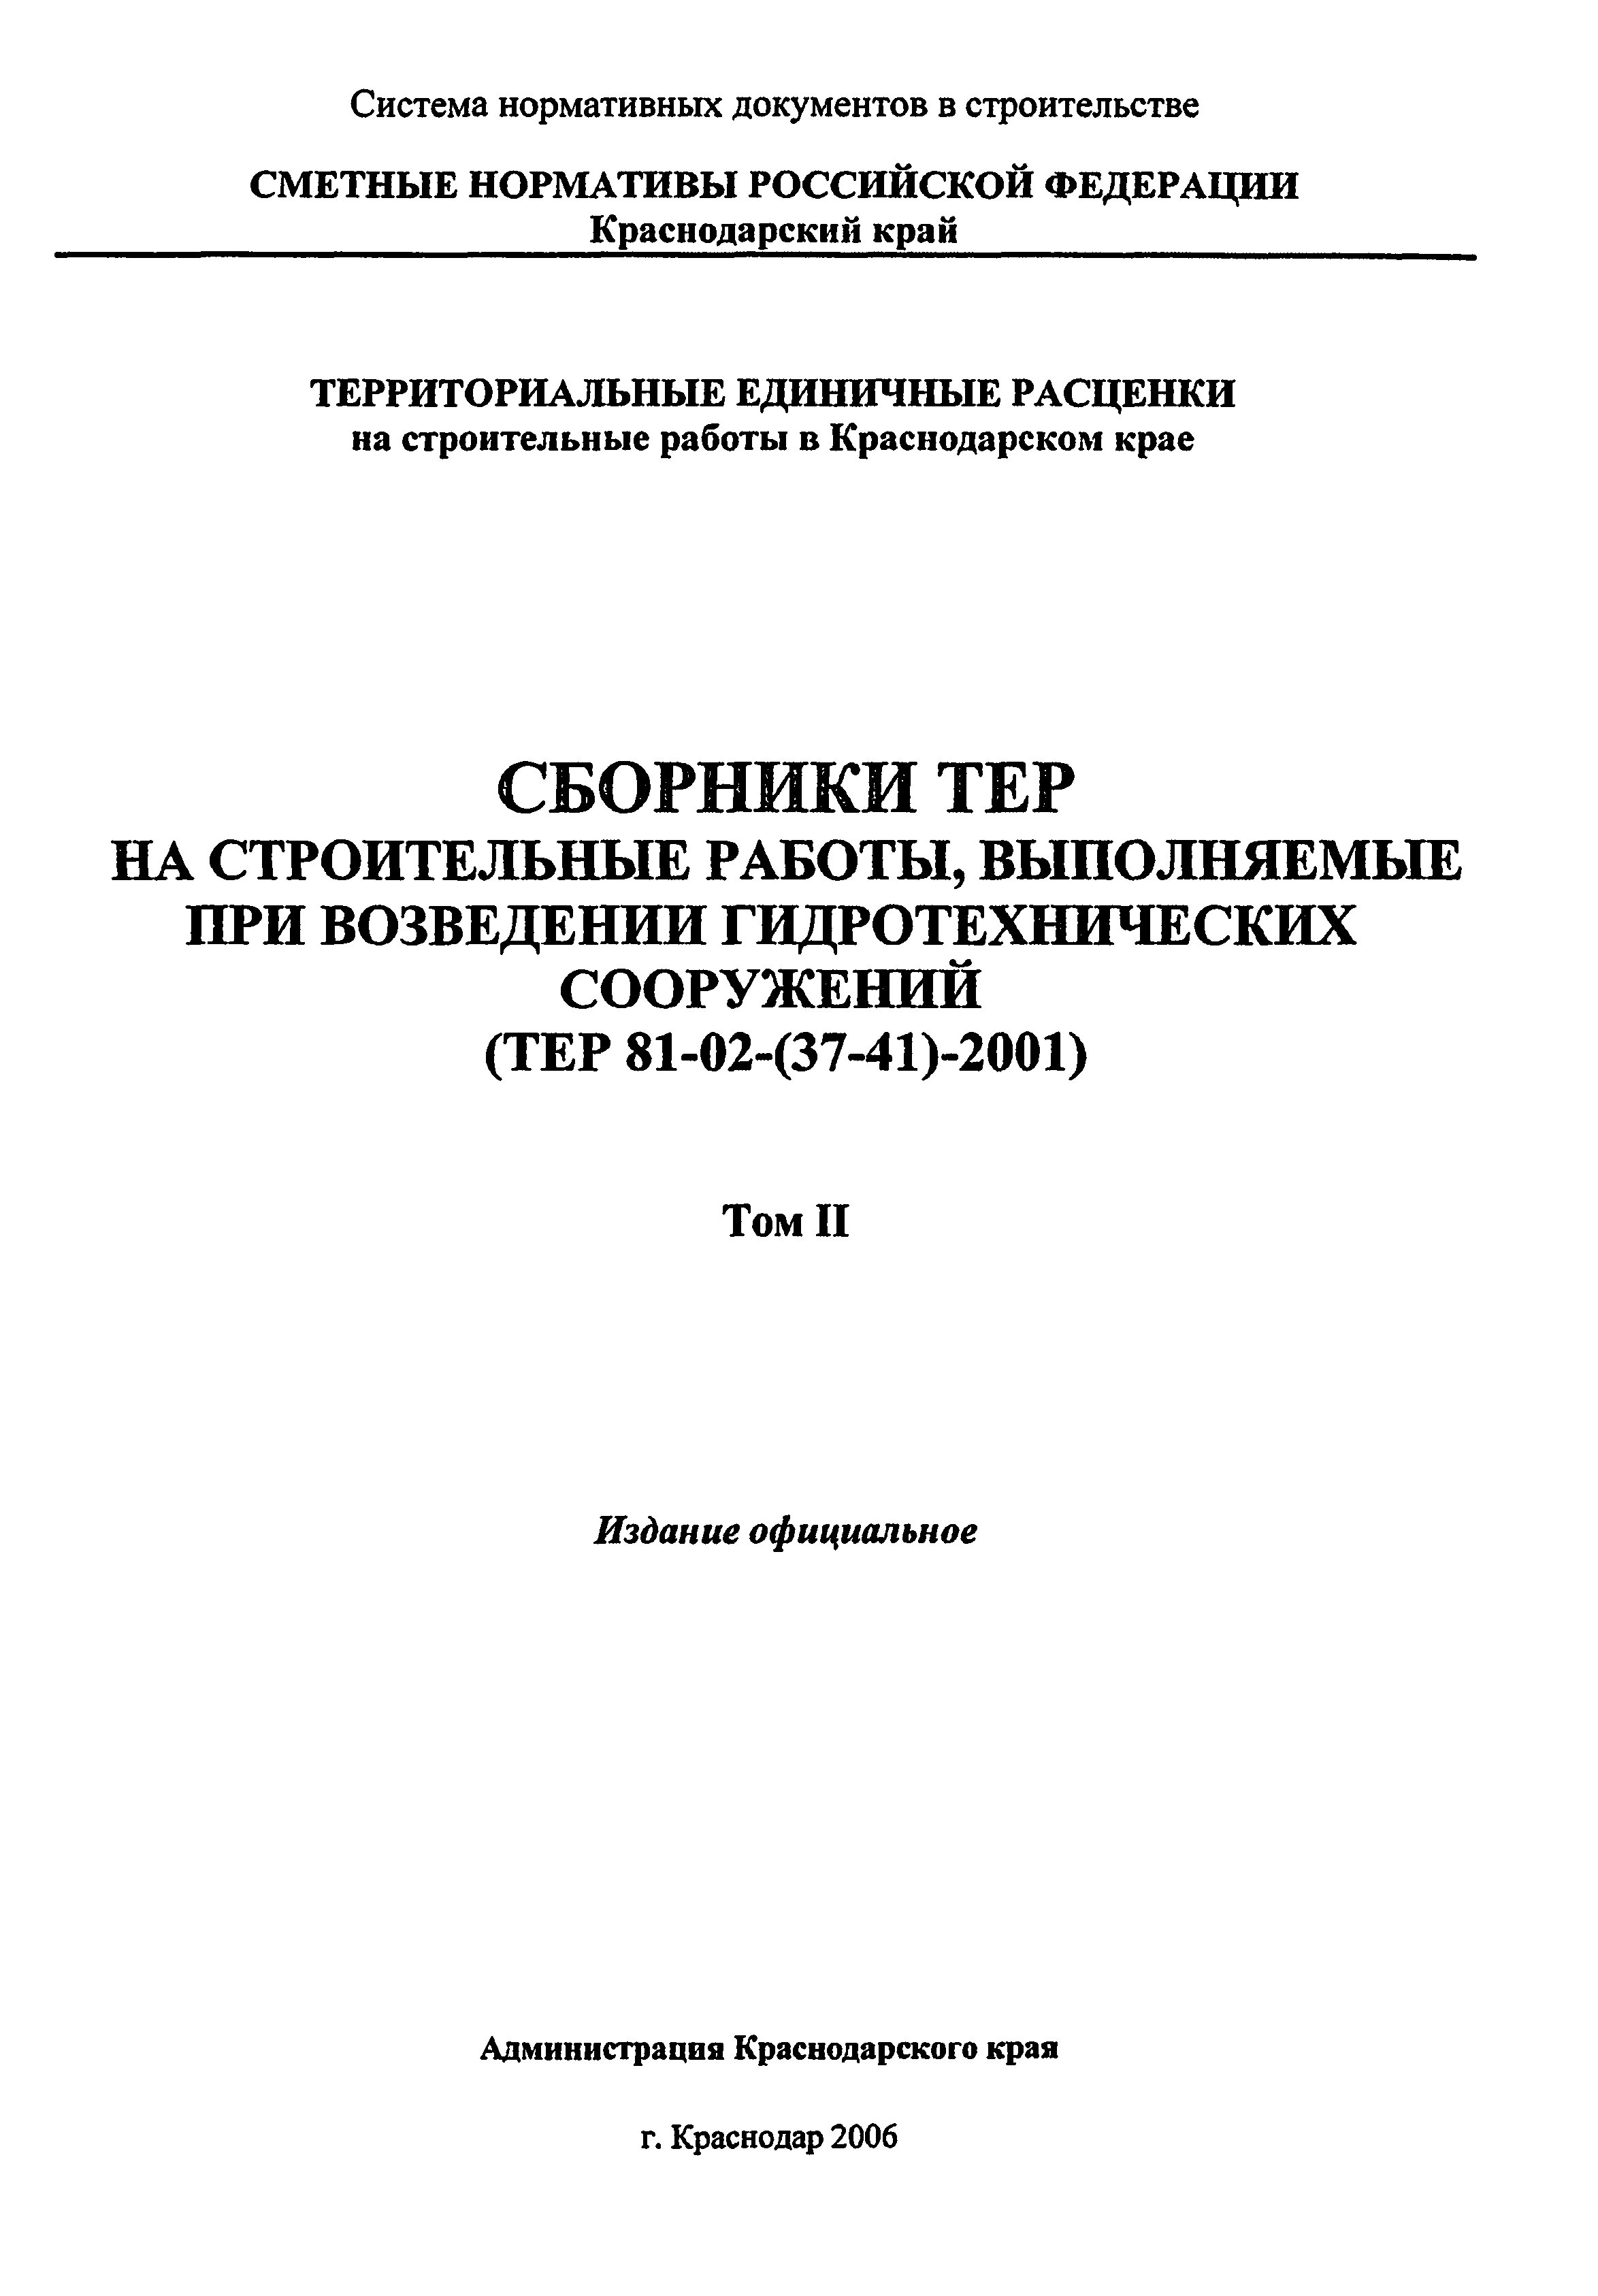 ТЕР Краснодарского края 2001-41